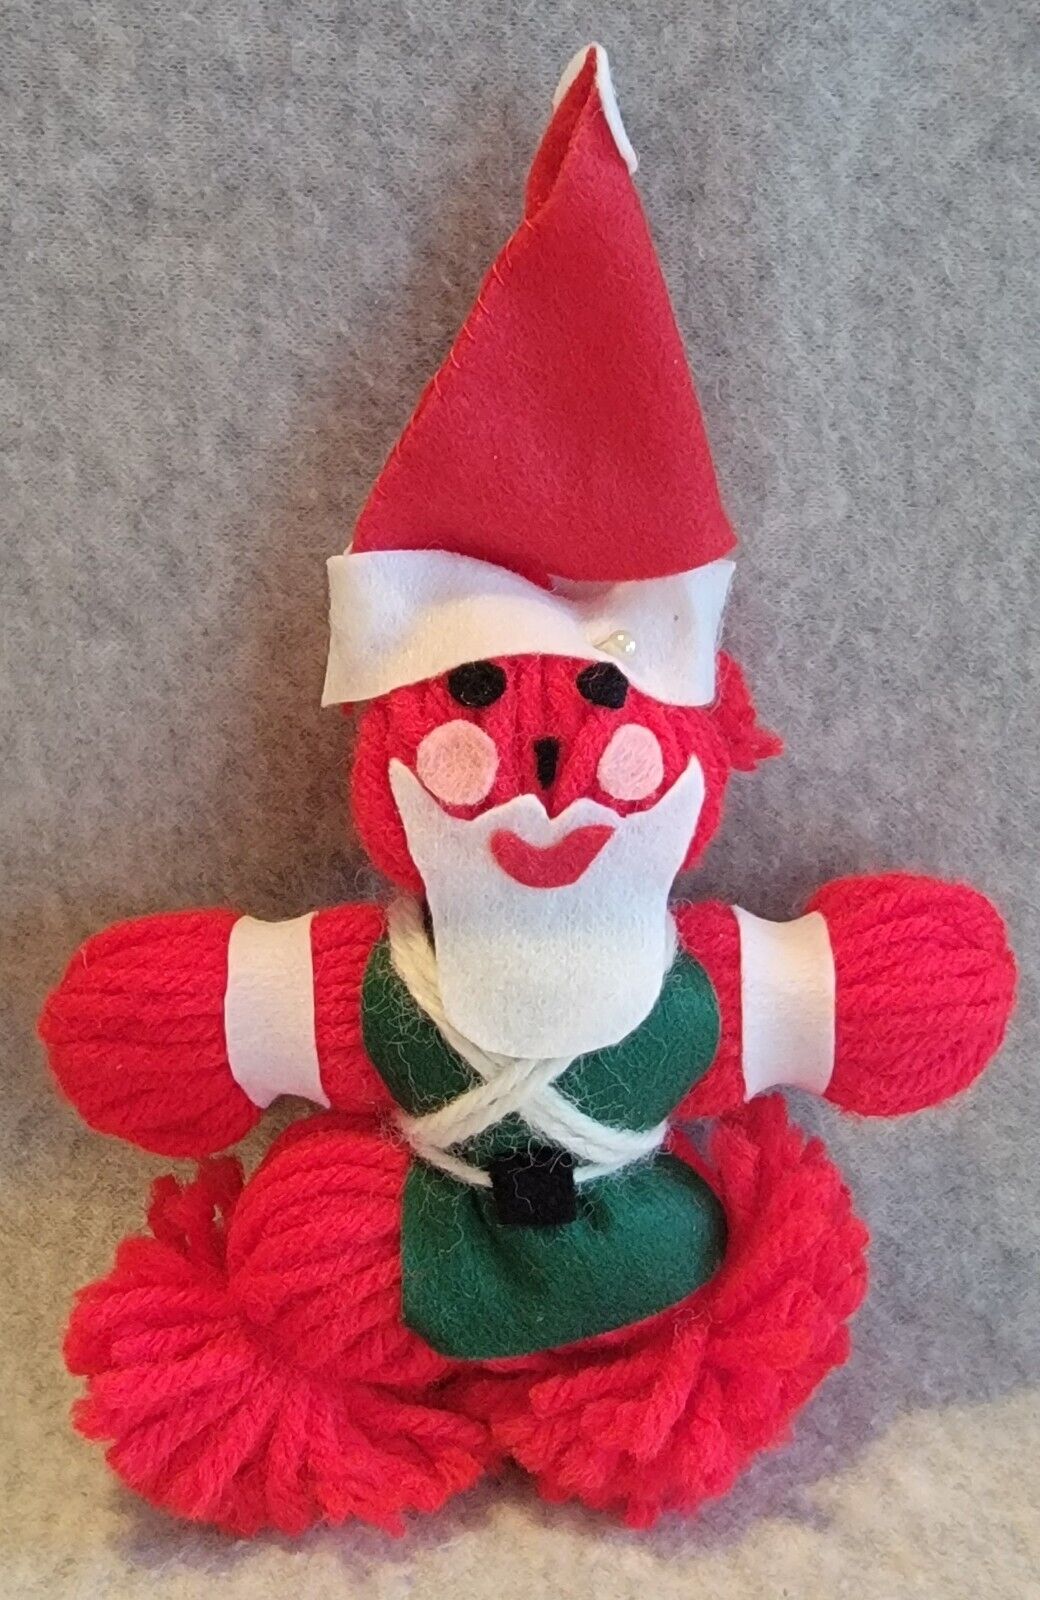 Vintage Christmas Yarn Handmade Santa Claus Ornament Good Condition